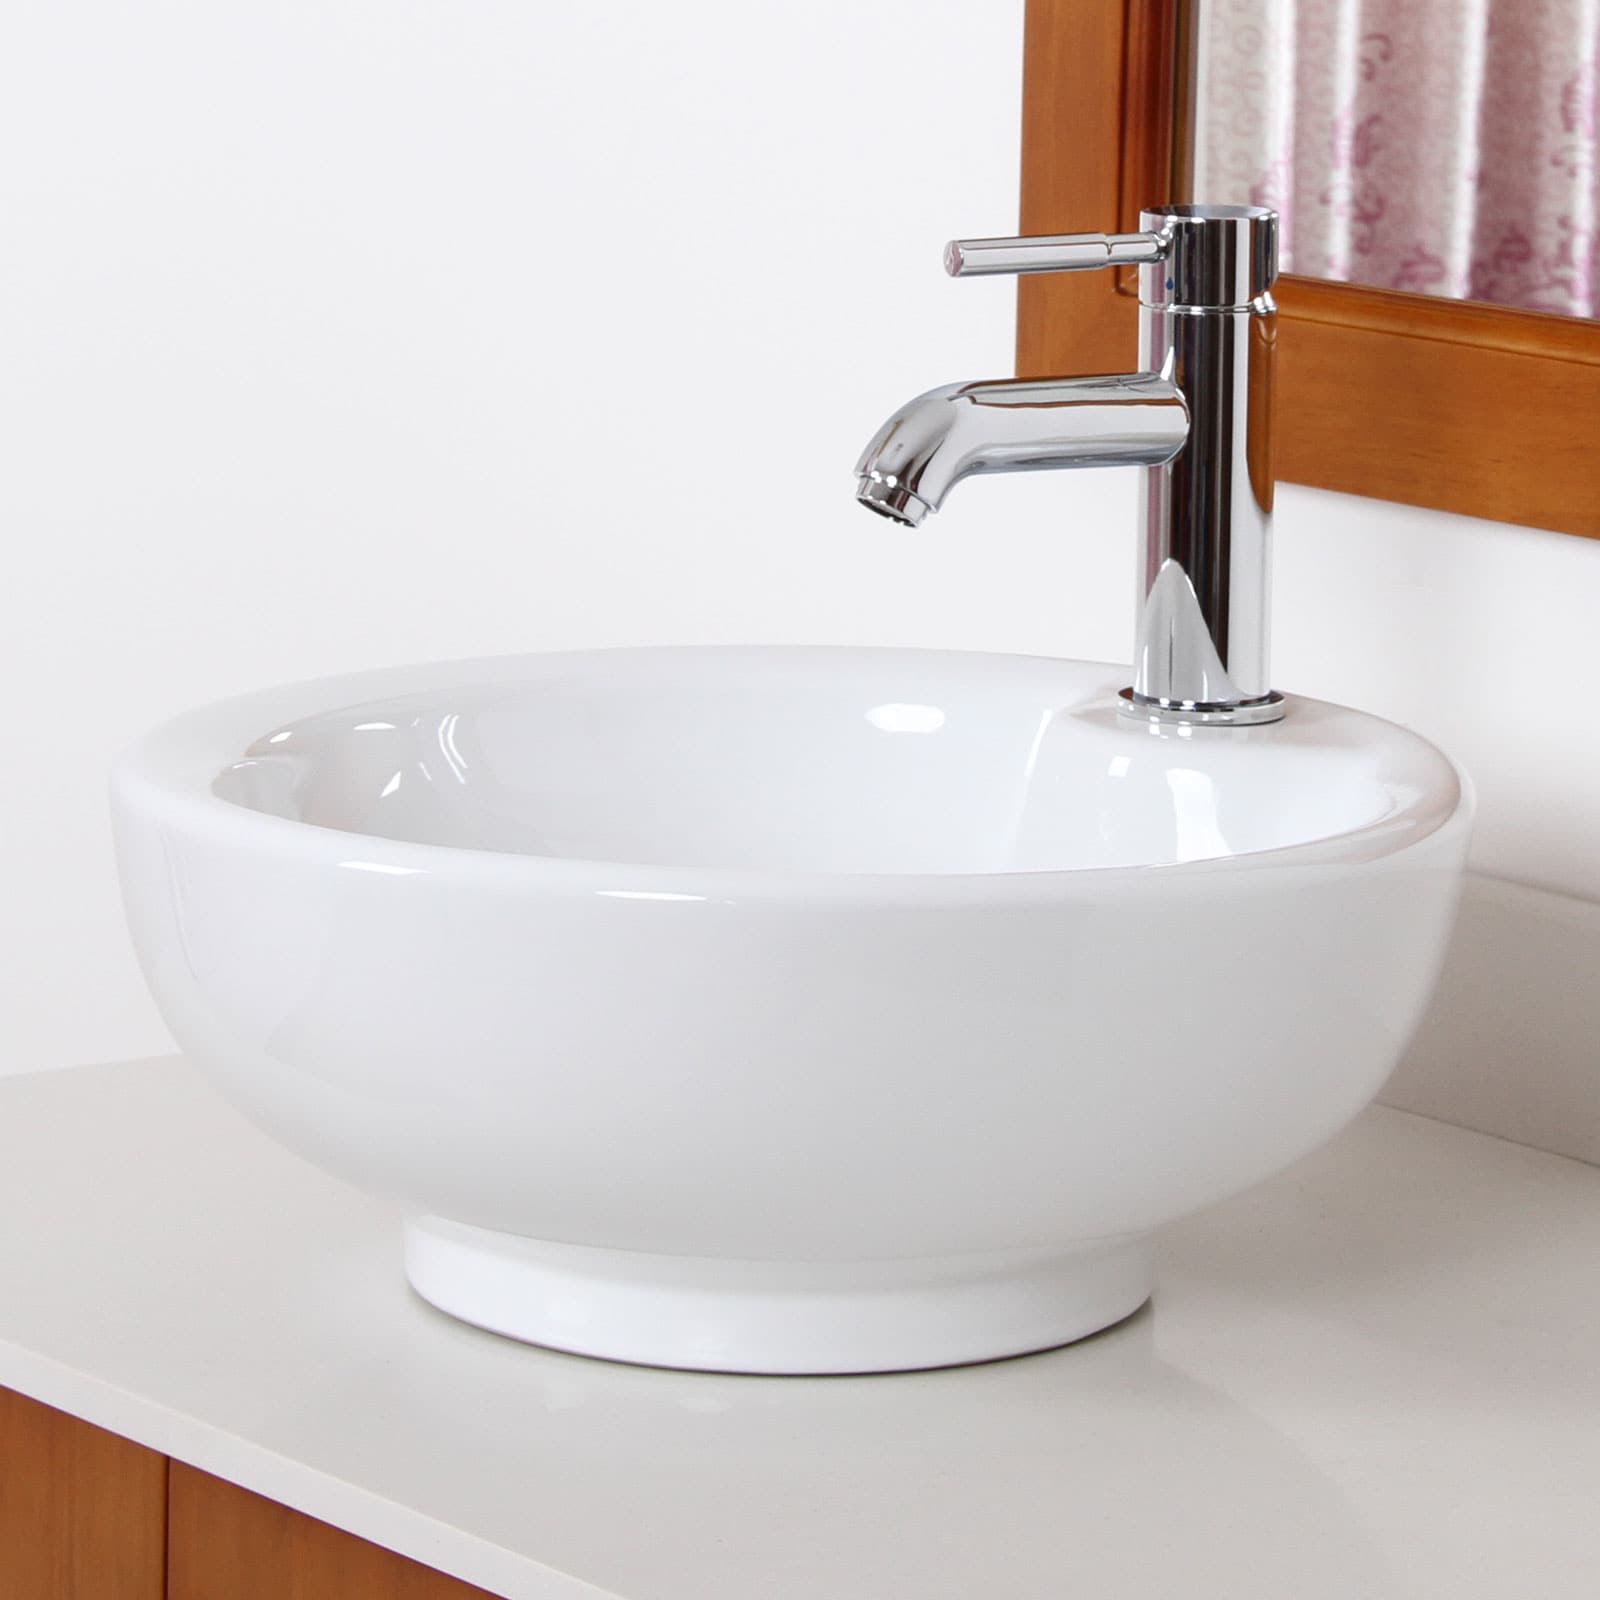 Shop Elite Grade A Ceramic Round Vessel-style Bathroom Sink - Free ...